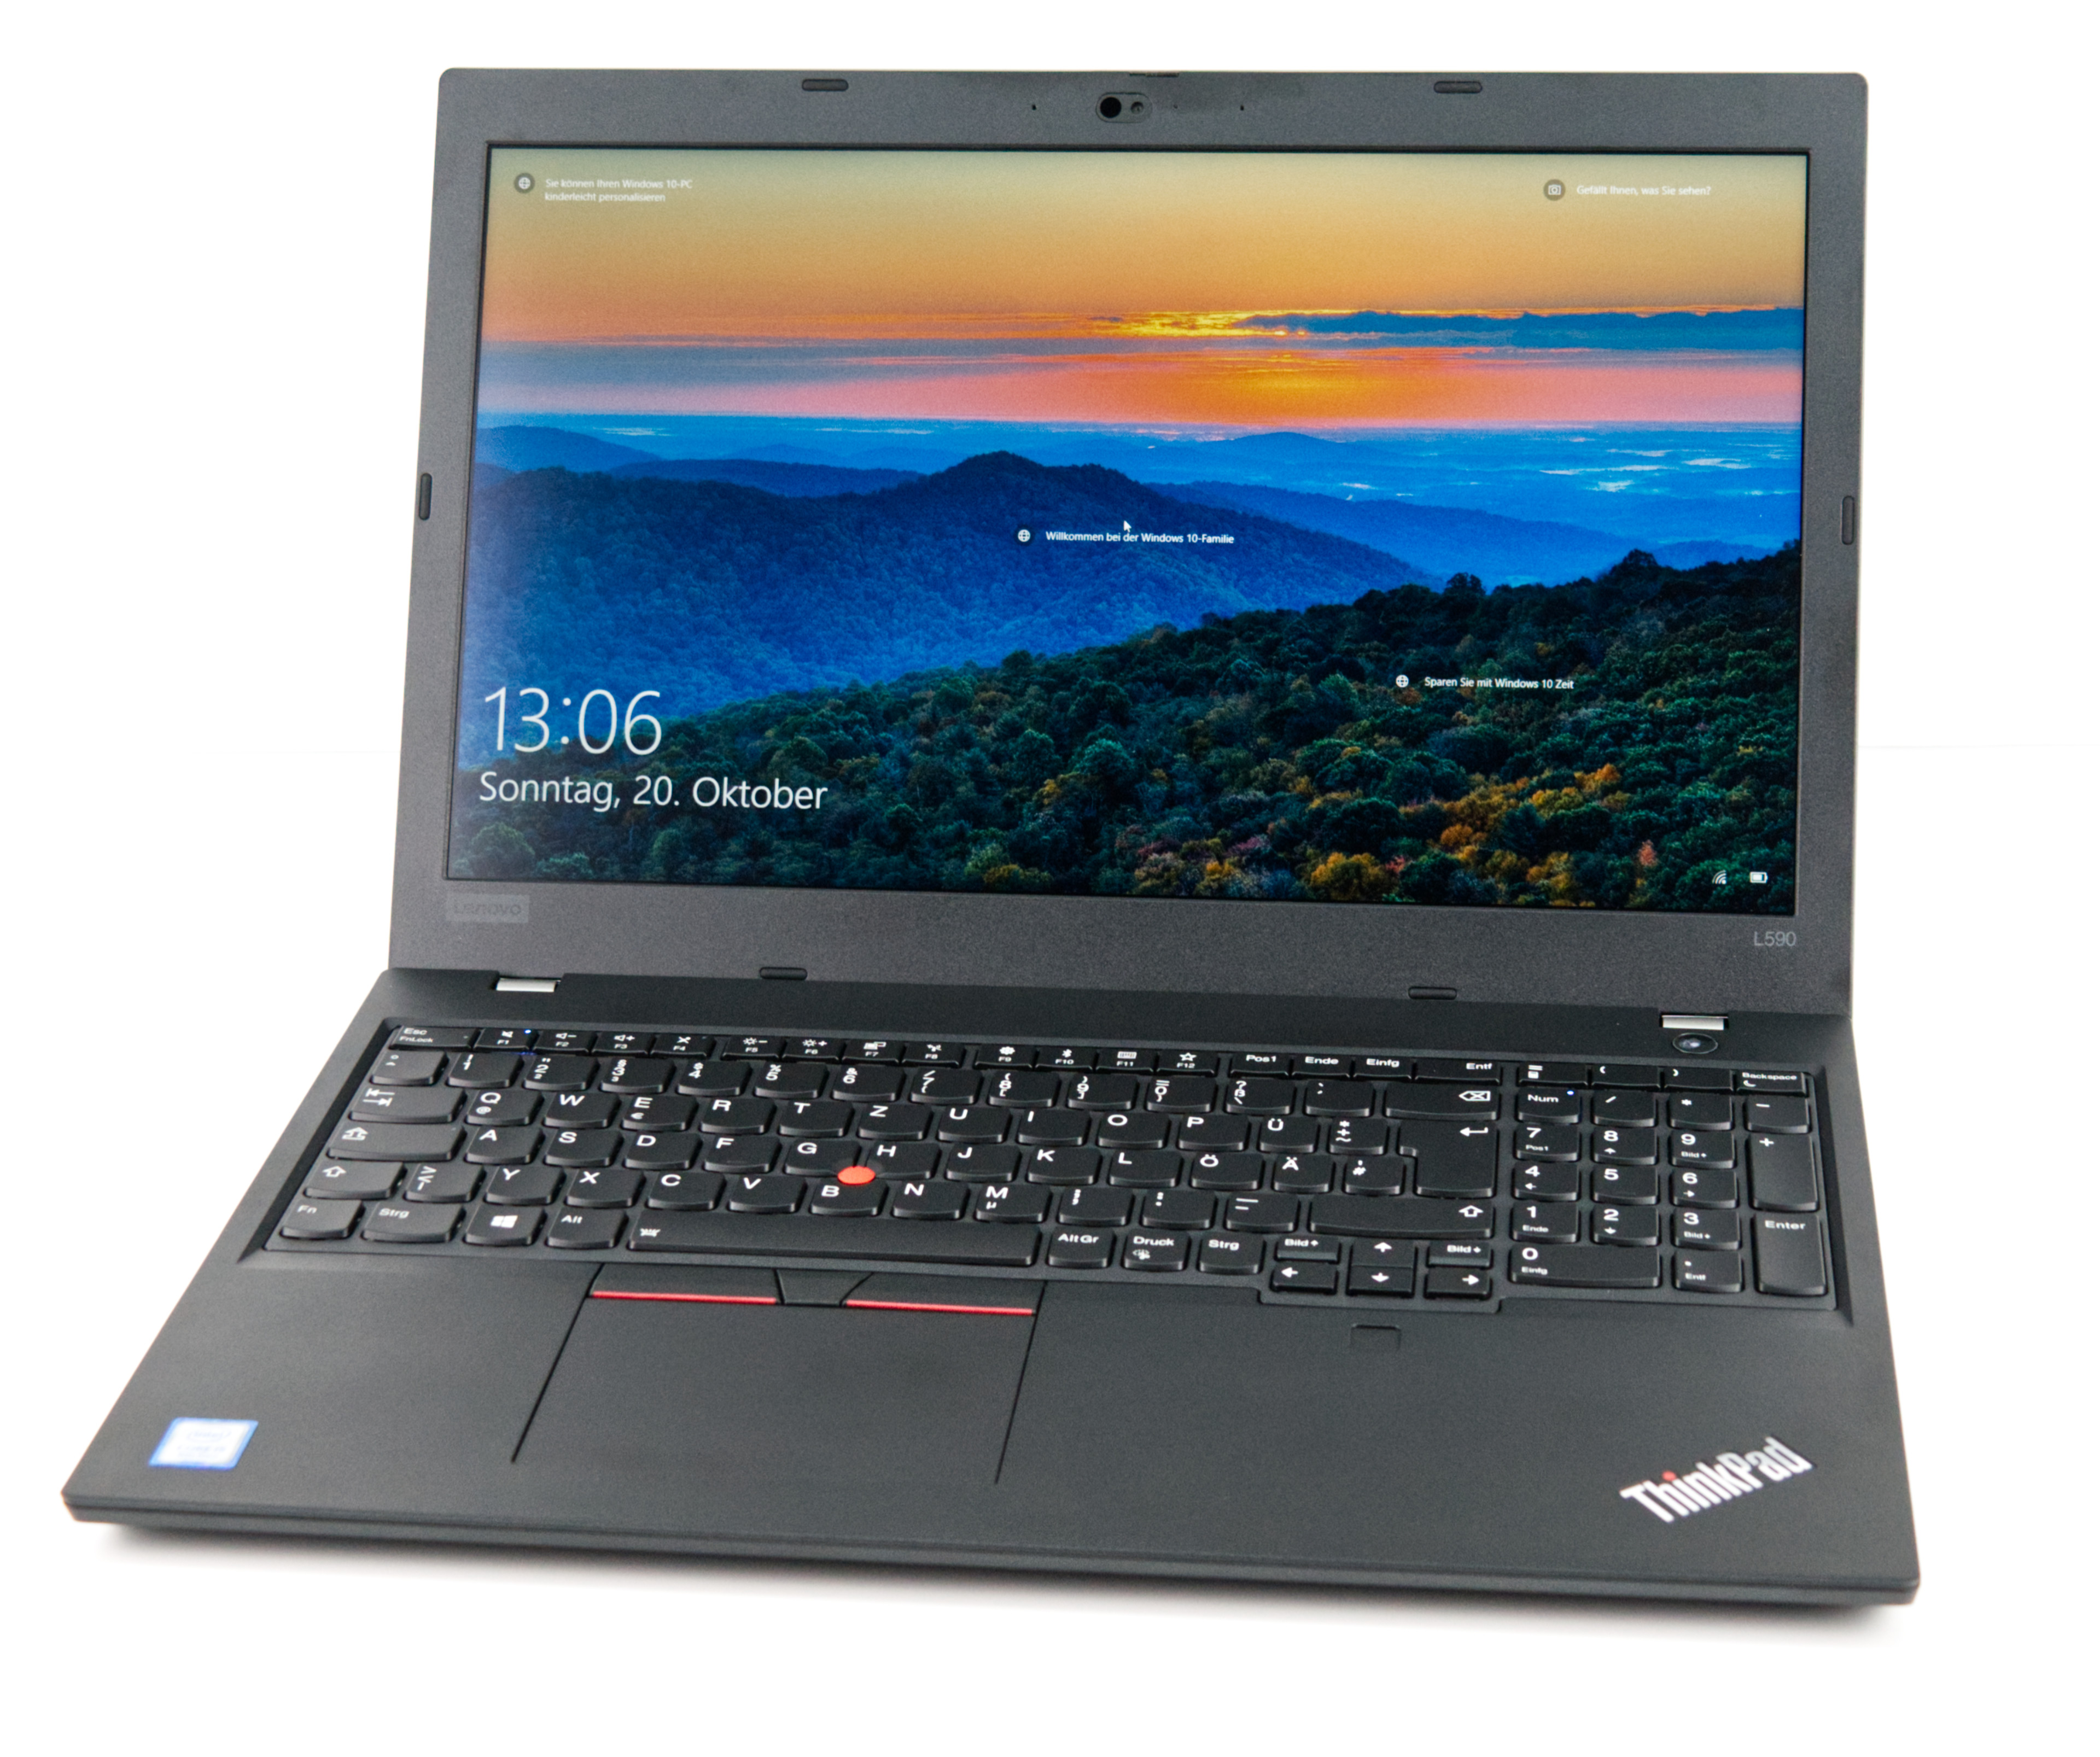 Lenovo ThinkPad L590: A budget business laptop that falls short of